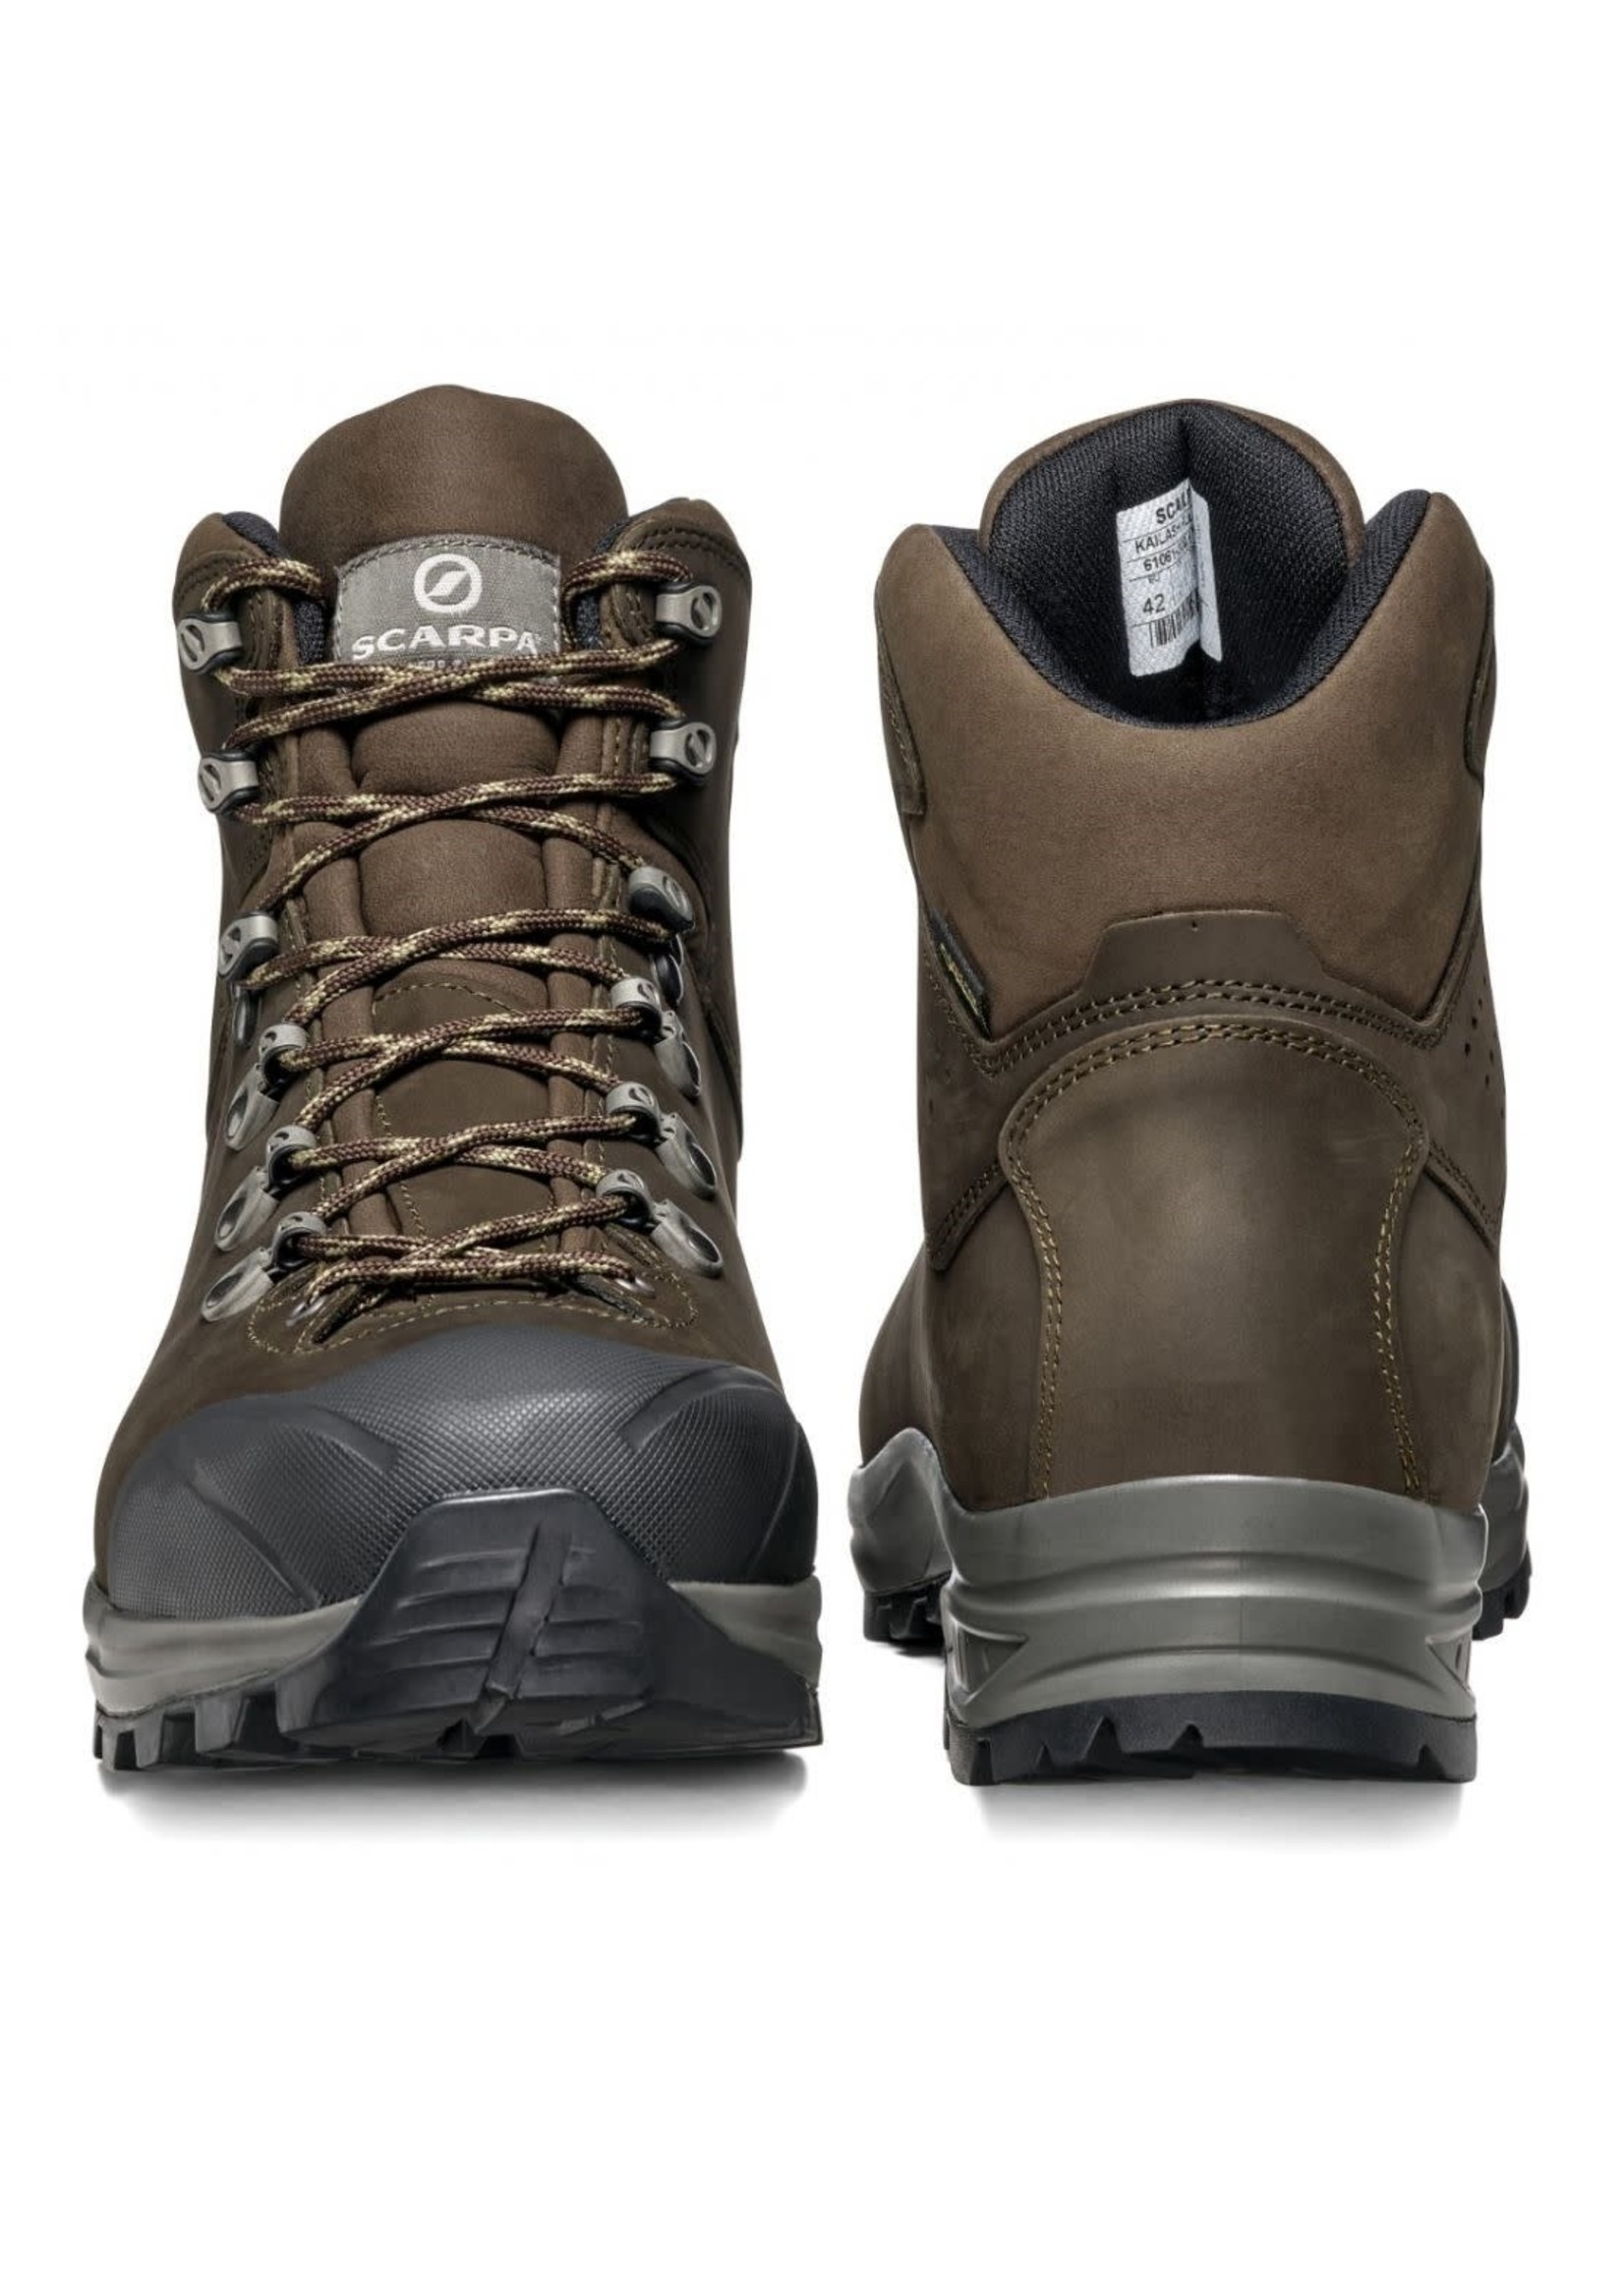 Scarpa Scarpa Kailash Plus GTX Hiking Boots - Men